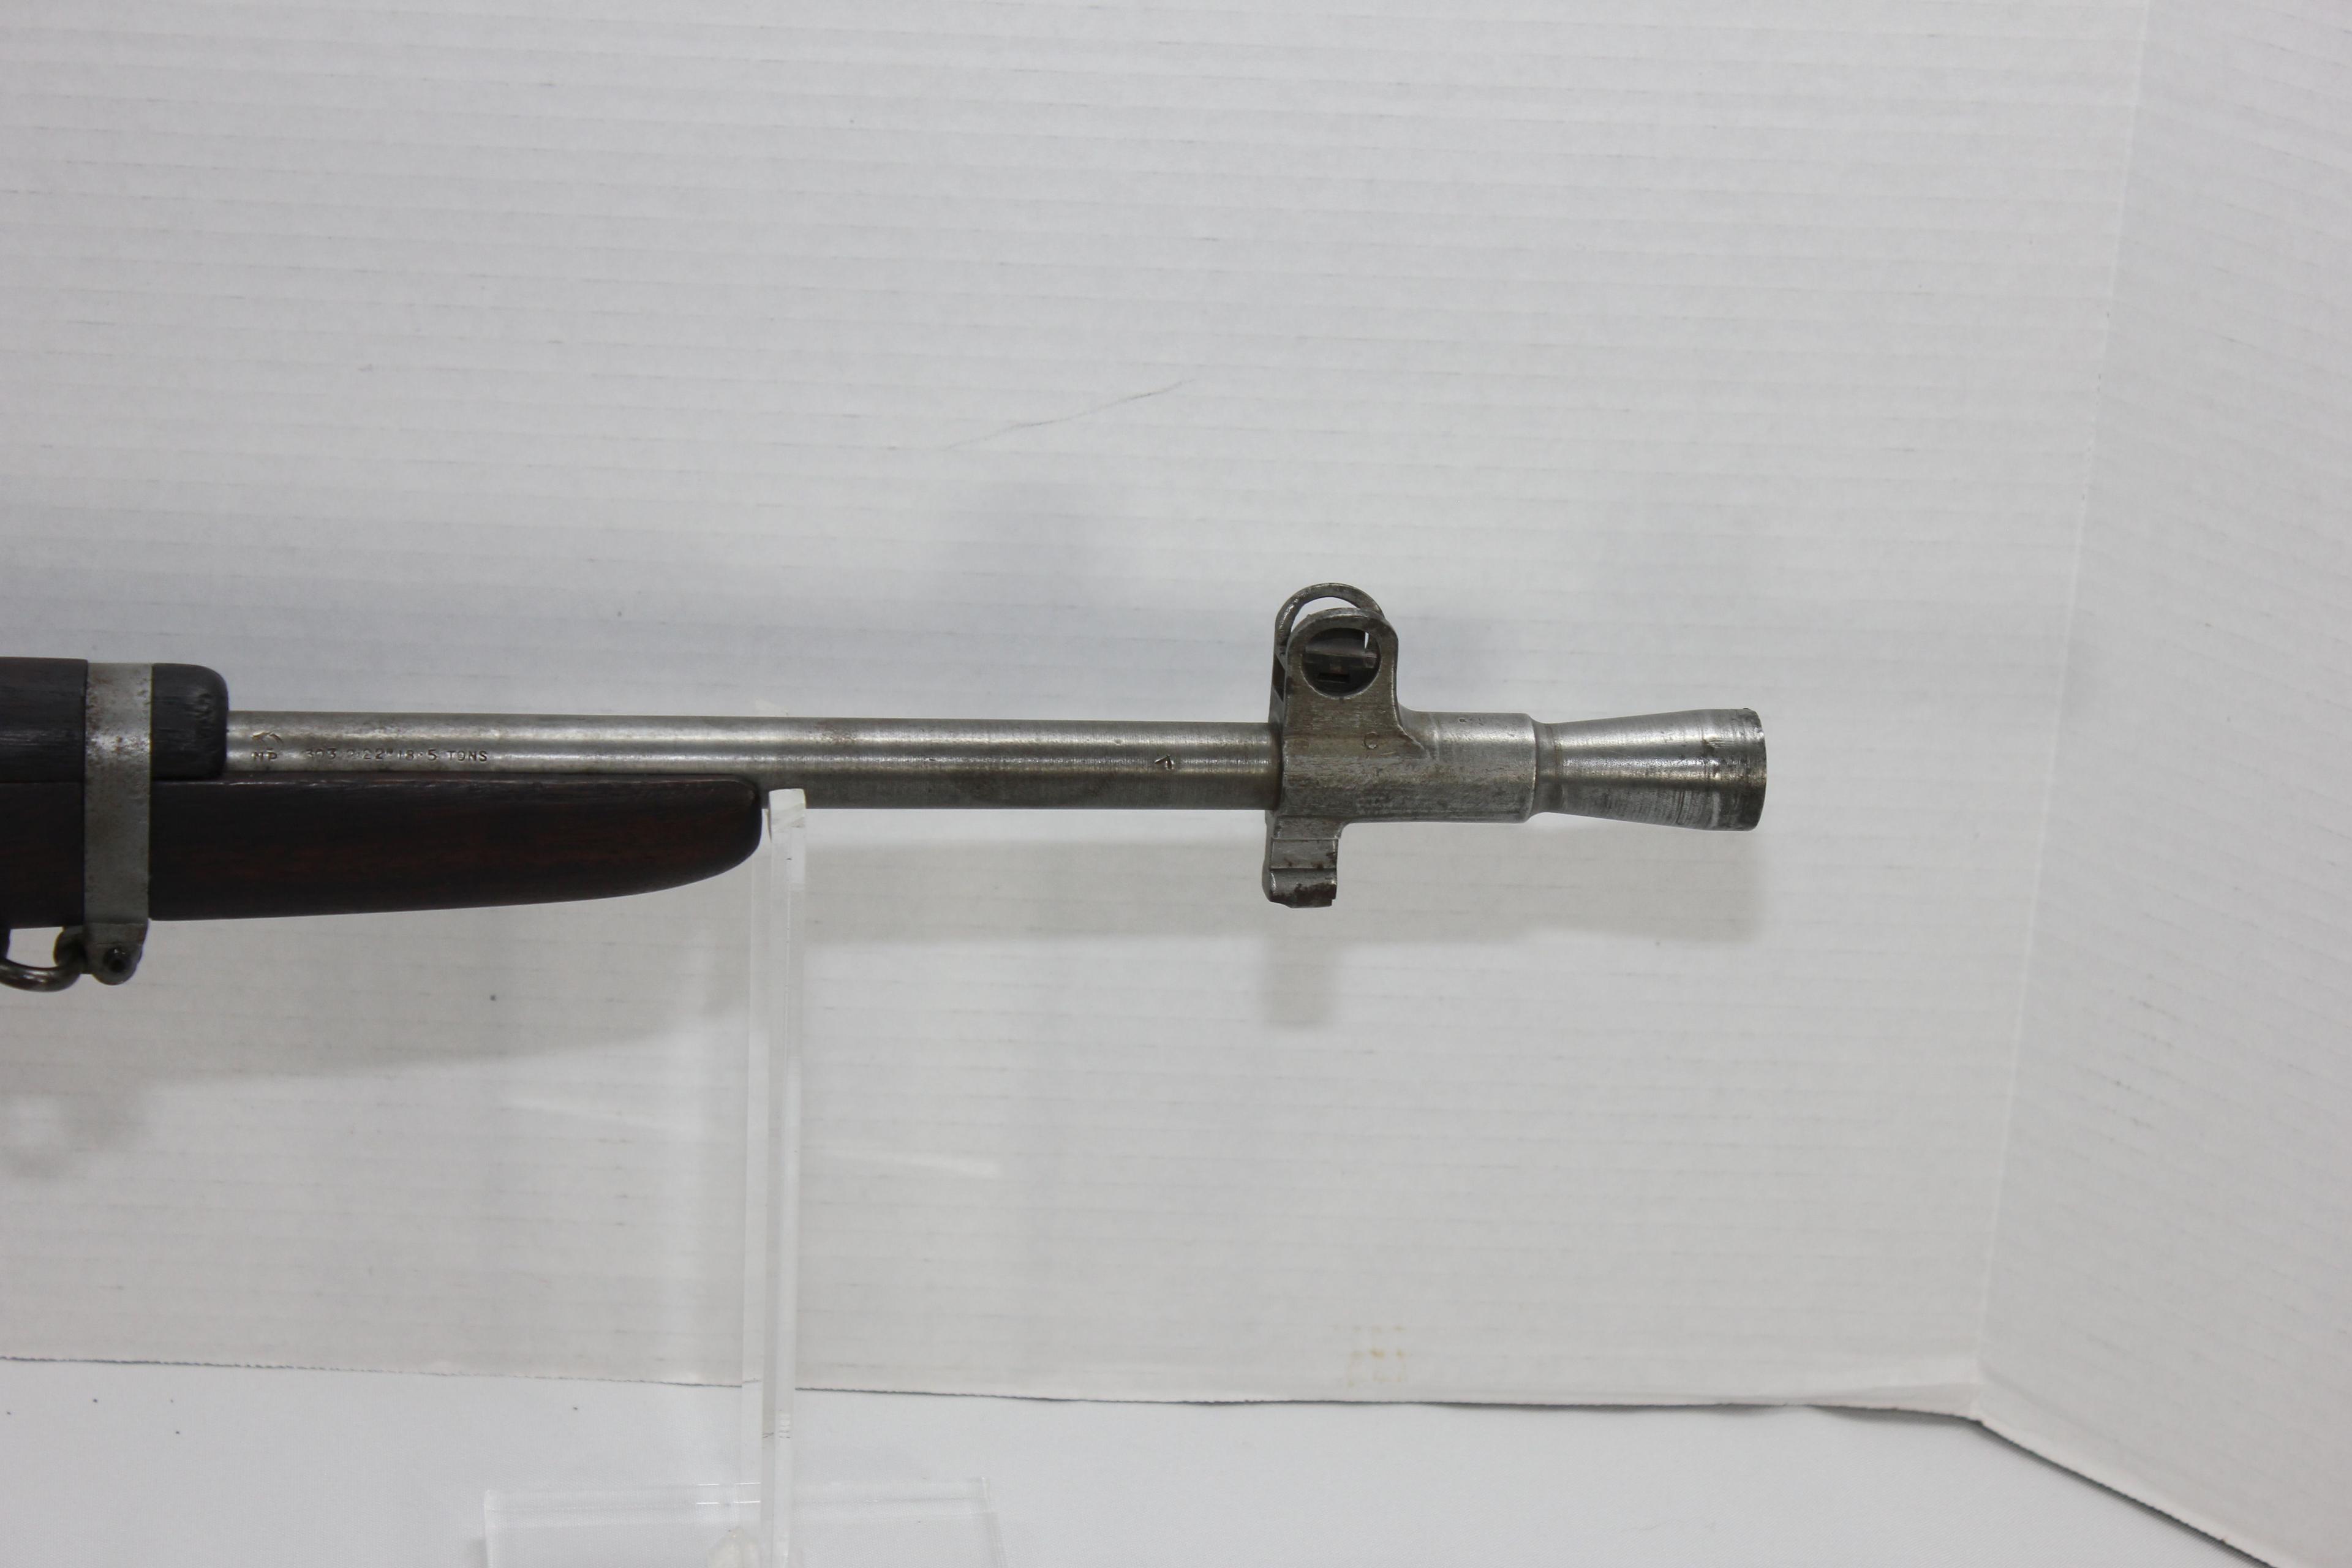 Enfield No. 5 MK I .303 British Cal. Jungle Carbine w/20-1/2" BBL, Flash Hider, and Bayonet Lug; Dat